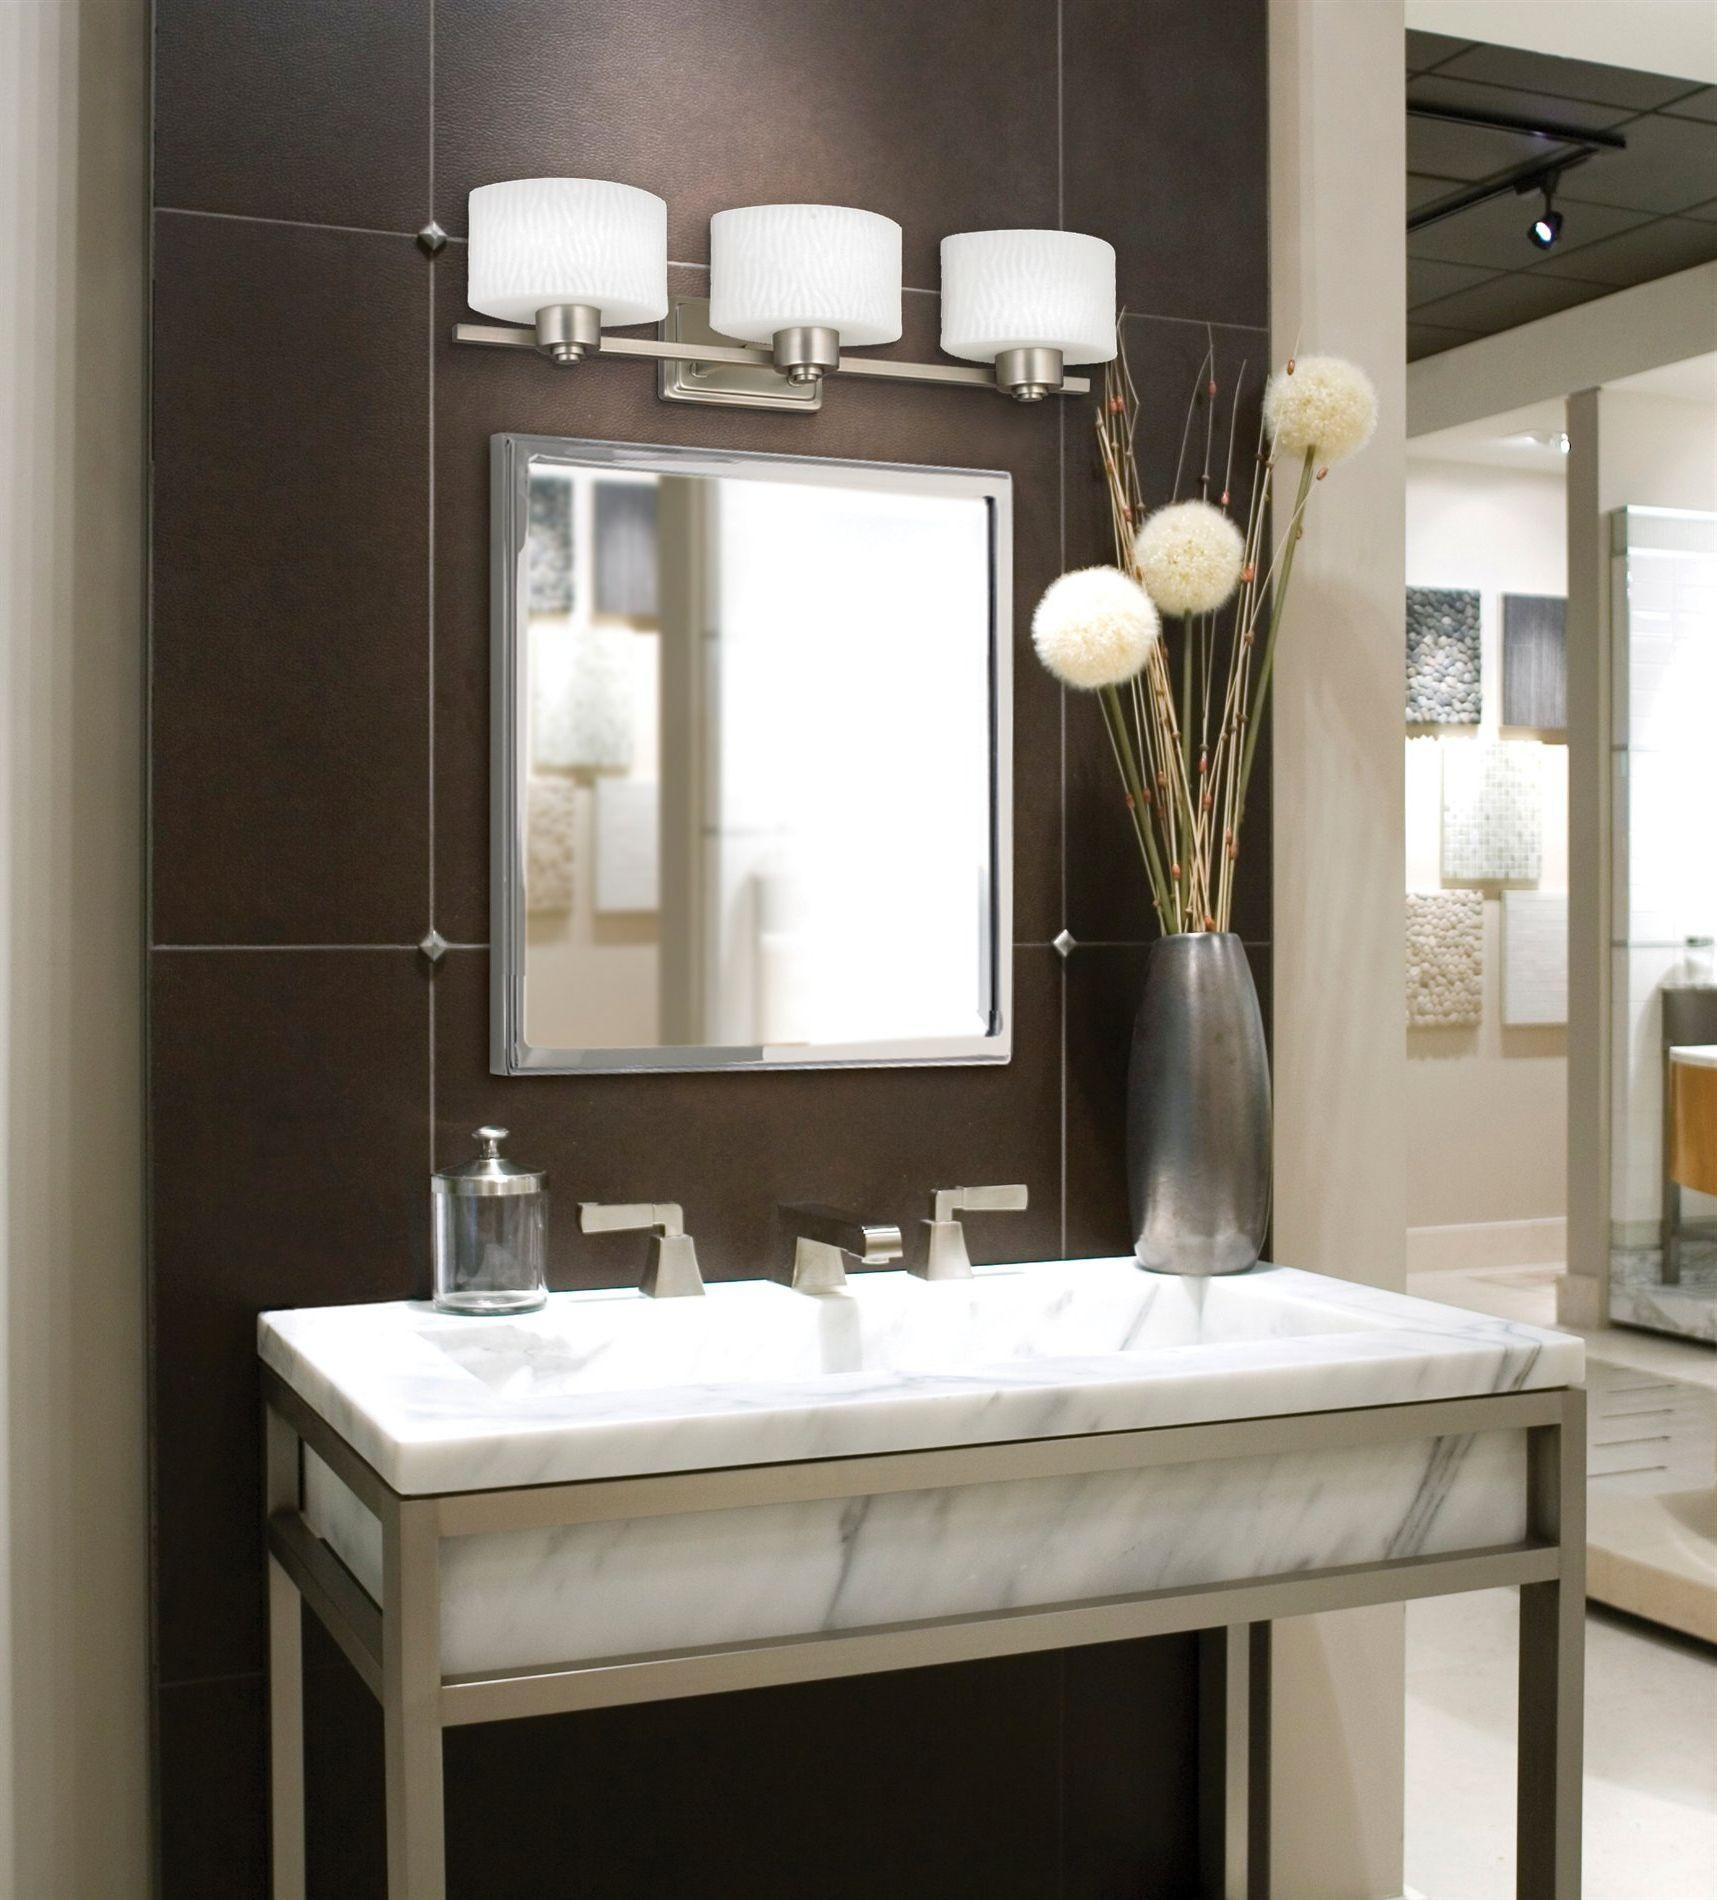 Bathroom Vanity And Mirror
 20 Bathroom Mirrors Ideas With Vanity